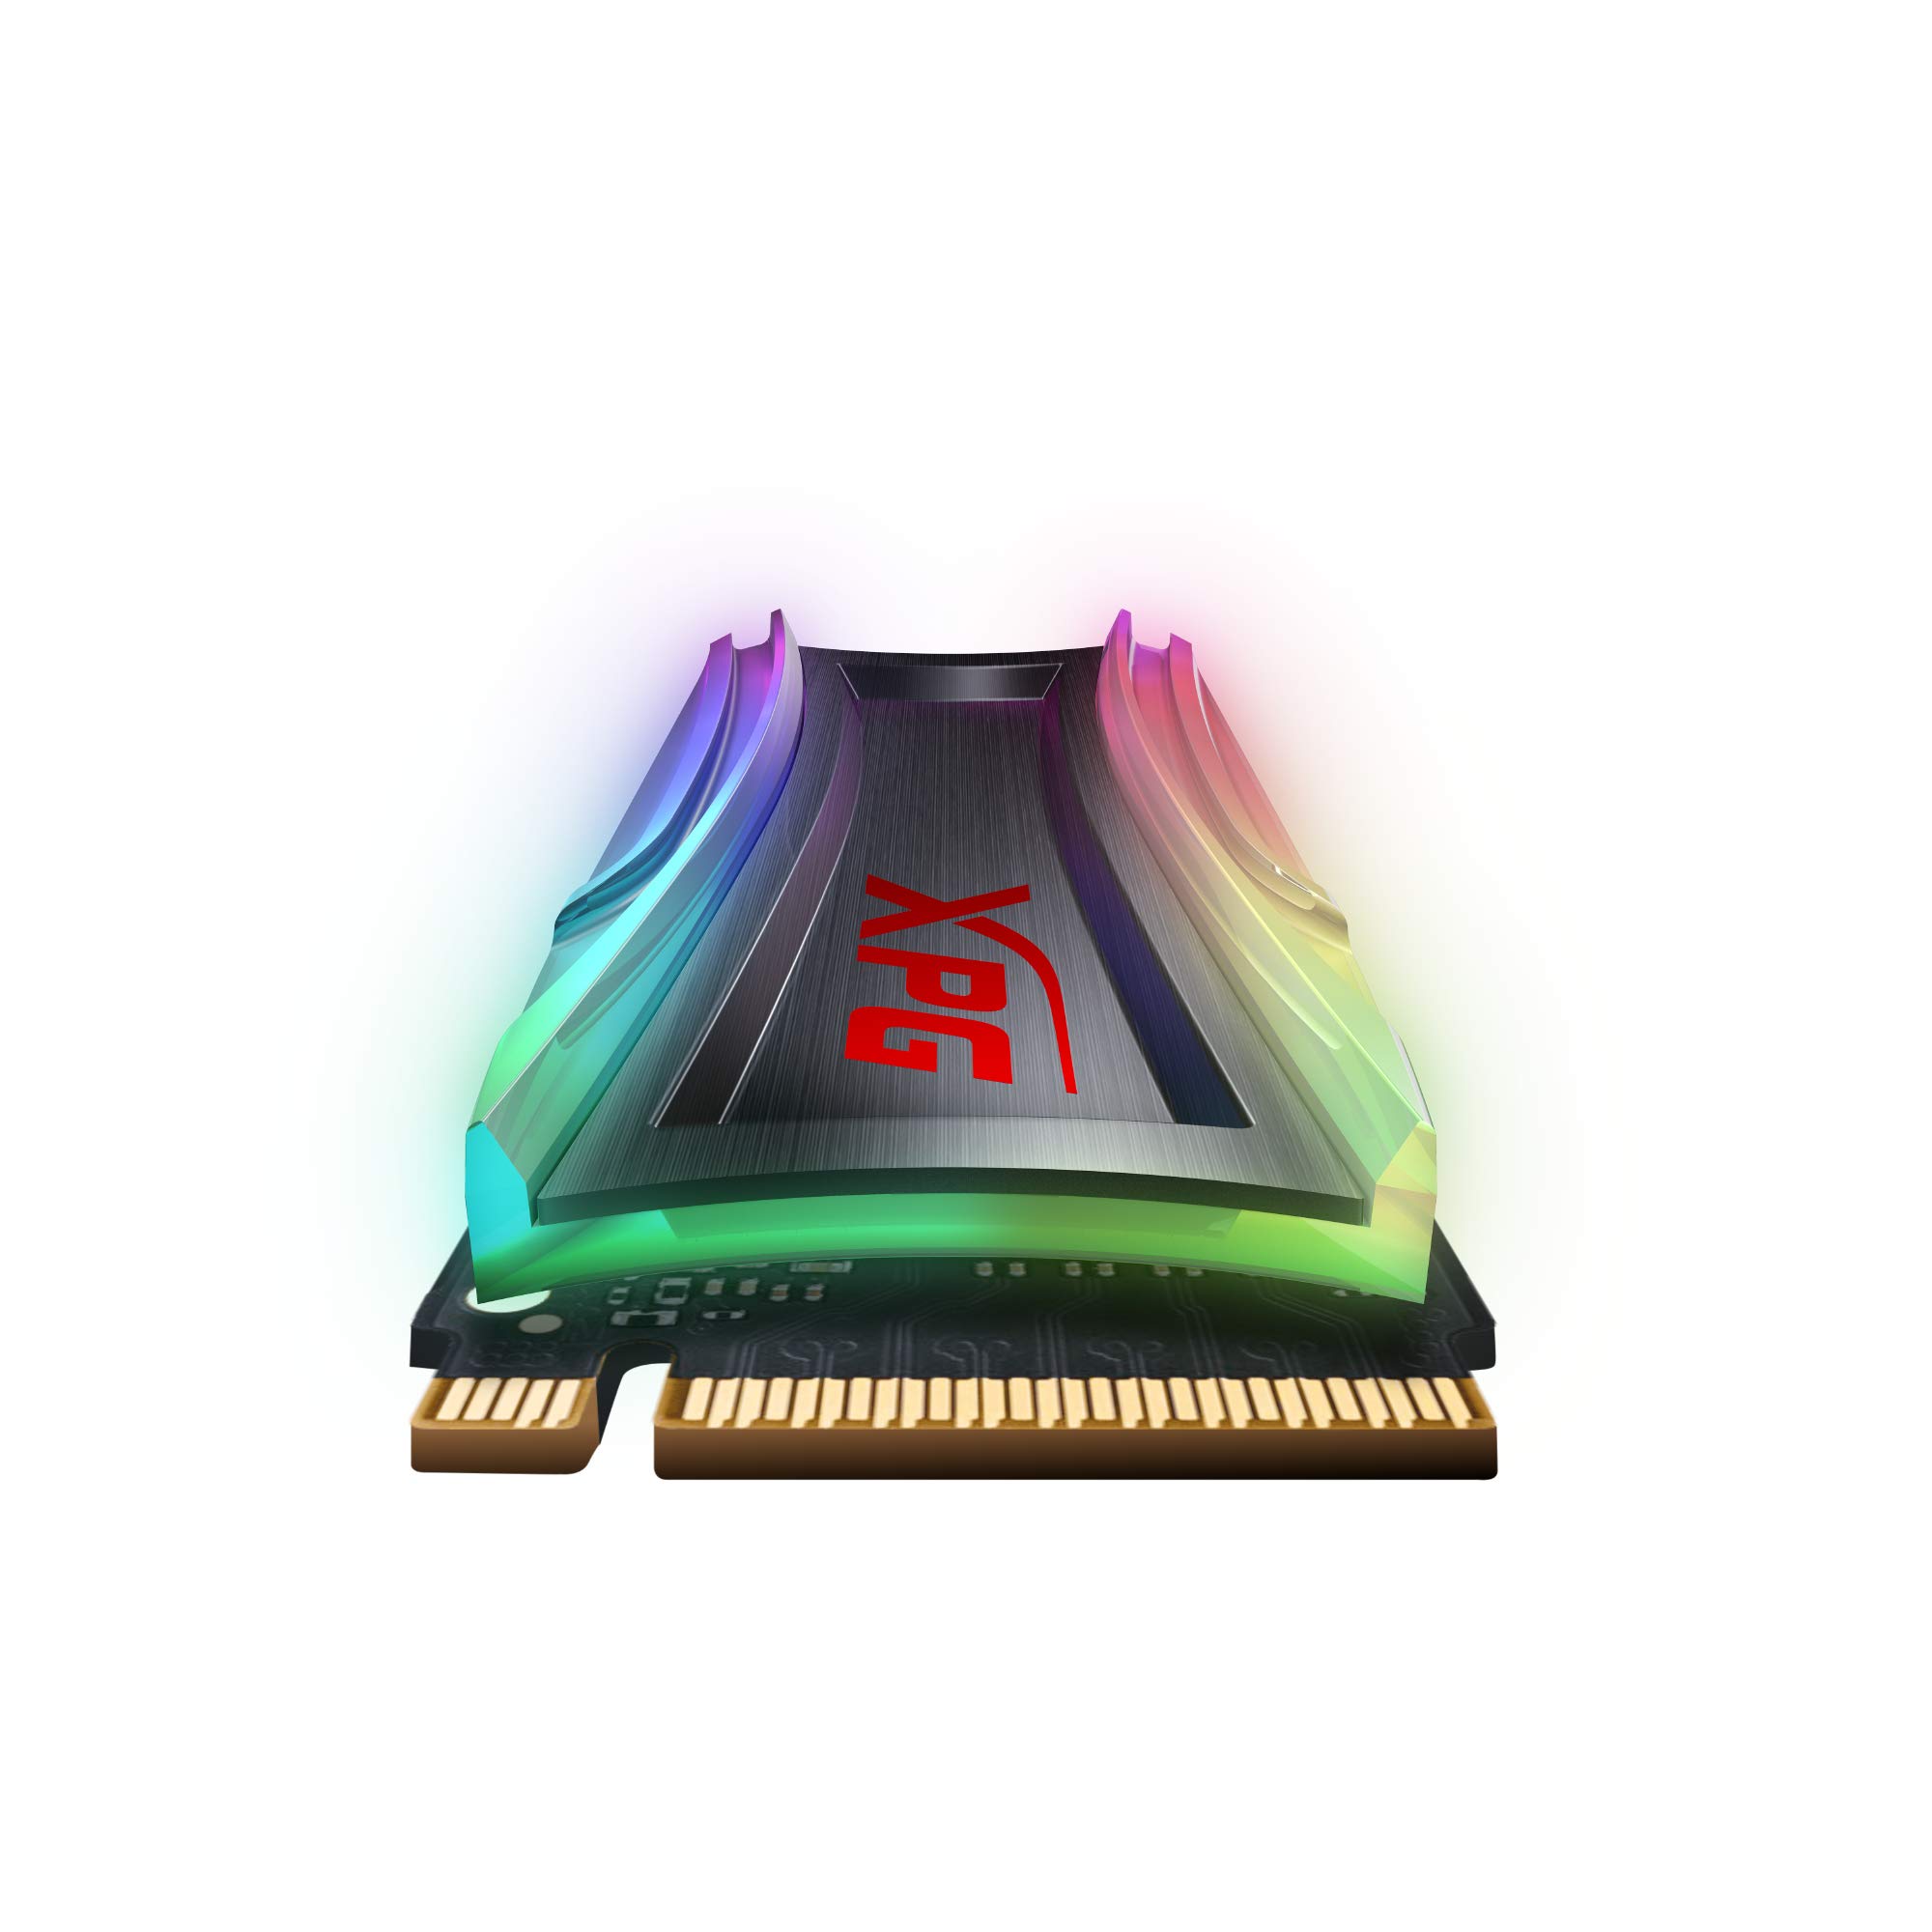 XPG S40G 1TB RGB 3D NAND PCIe Gen3x4 NVMe 1.3 M.2 2280 Internal SSD (AS40G-1TT-C)